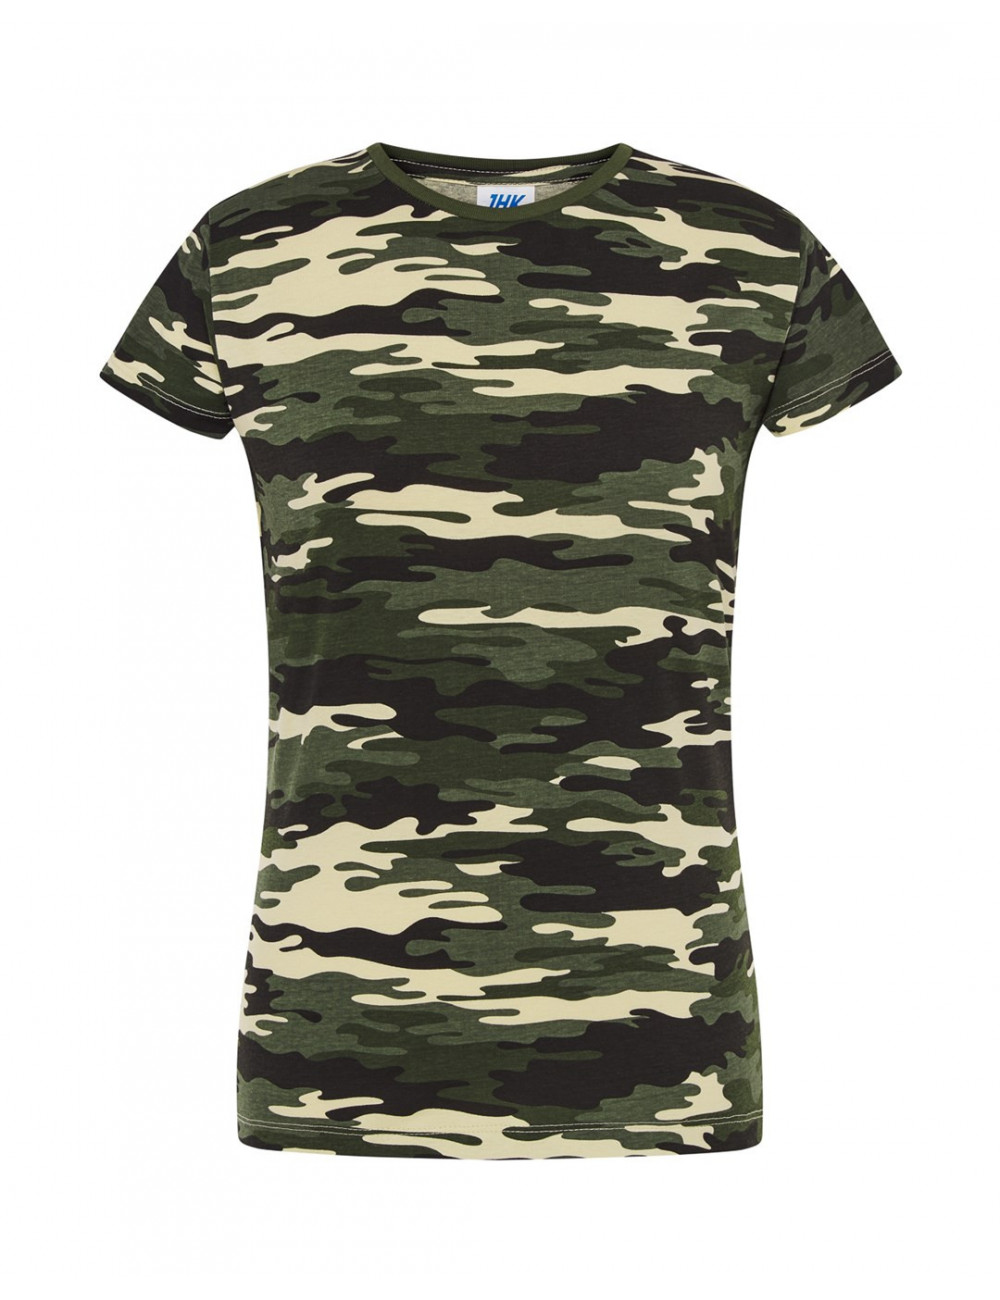 Damen Tsrl CMF Lady Comfort Militär-T-Shirt Jhk